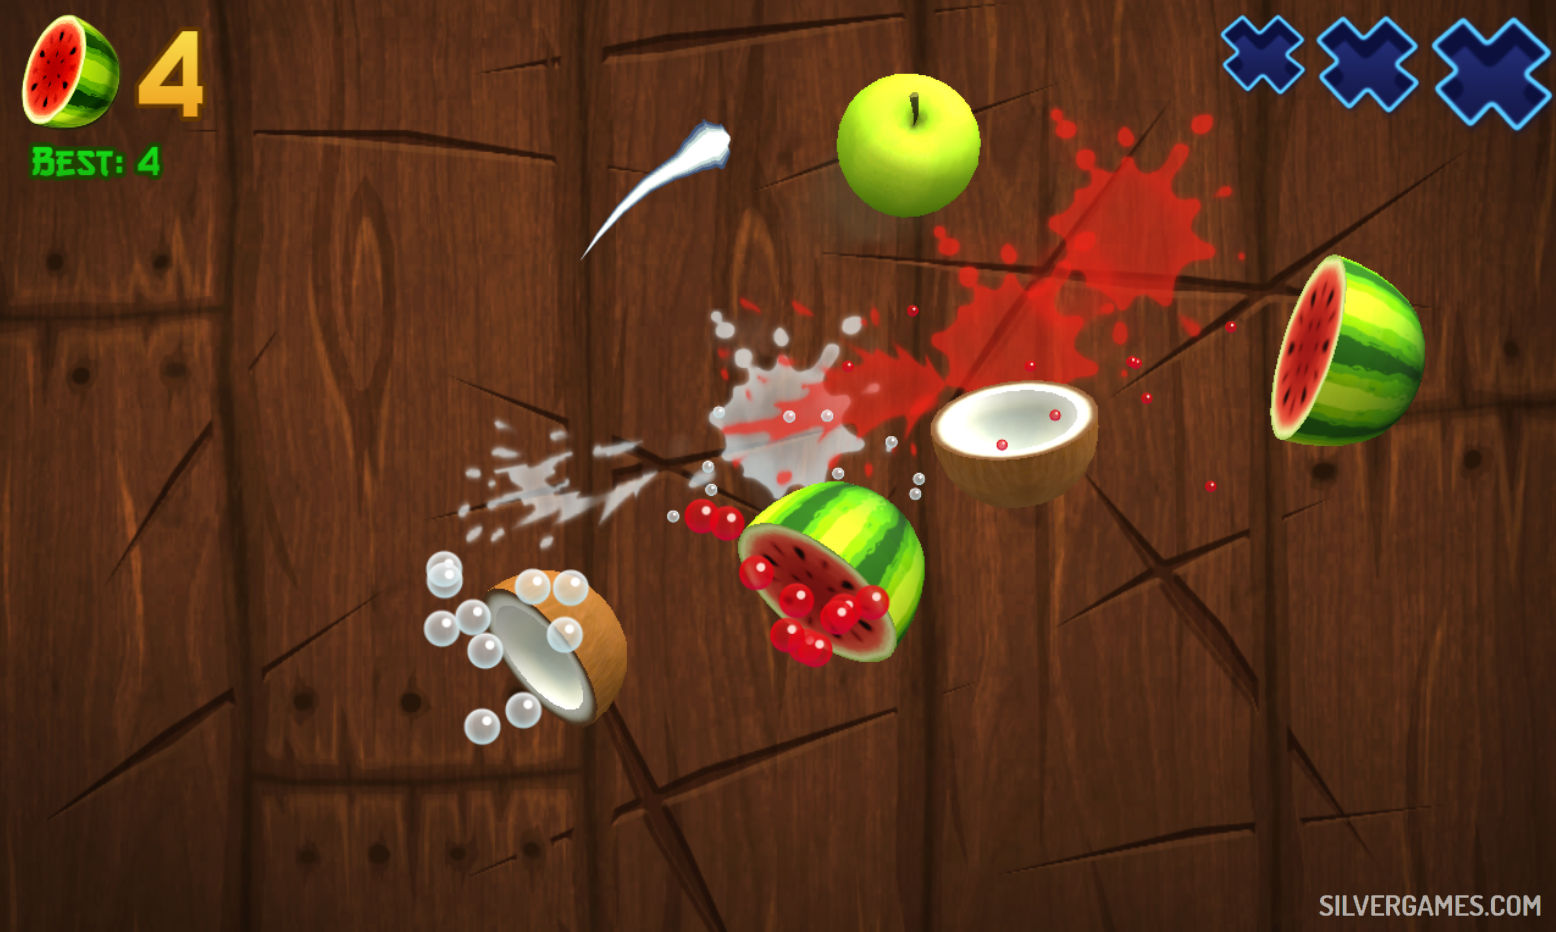 Fruit Ninja — play free online